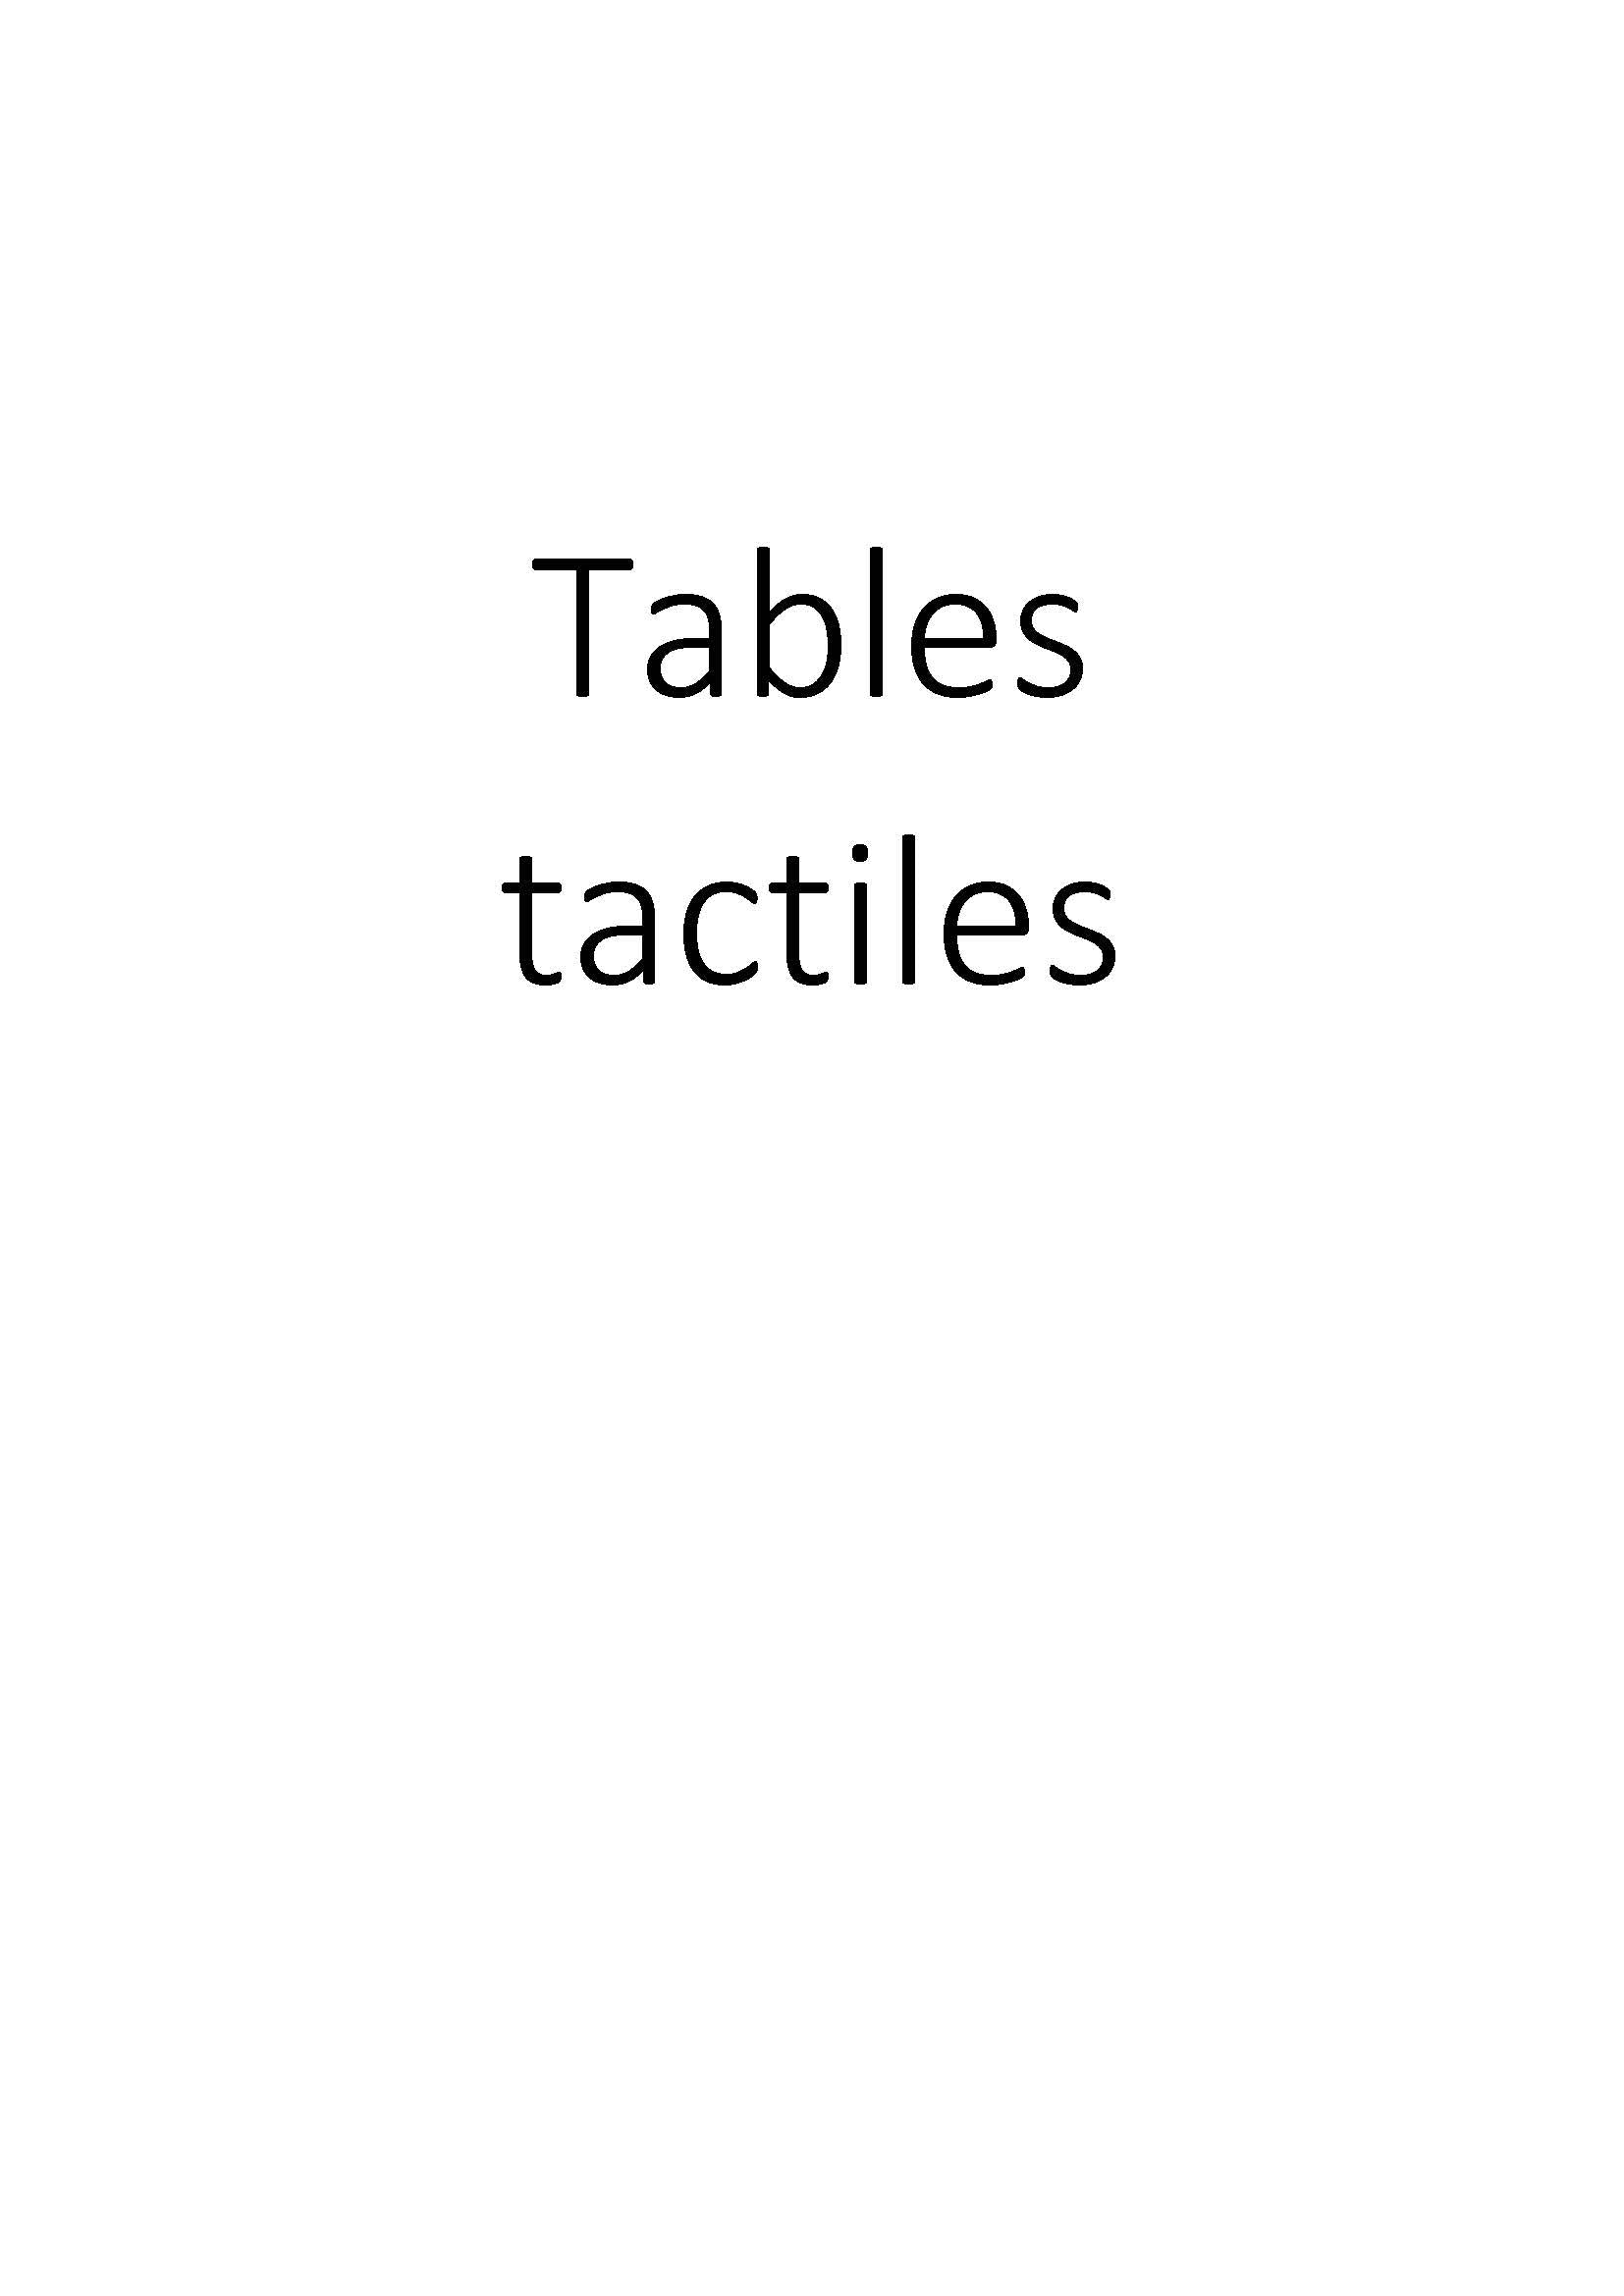 Tables tactiles clicktofournisseur.com